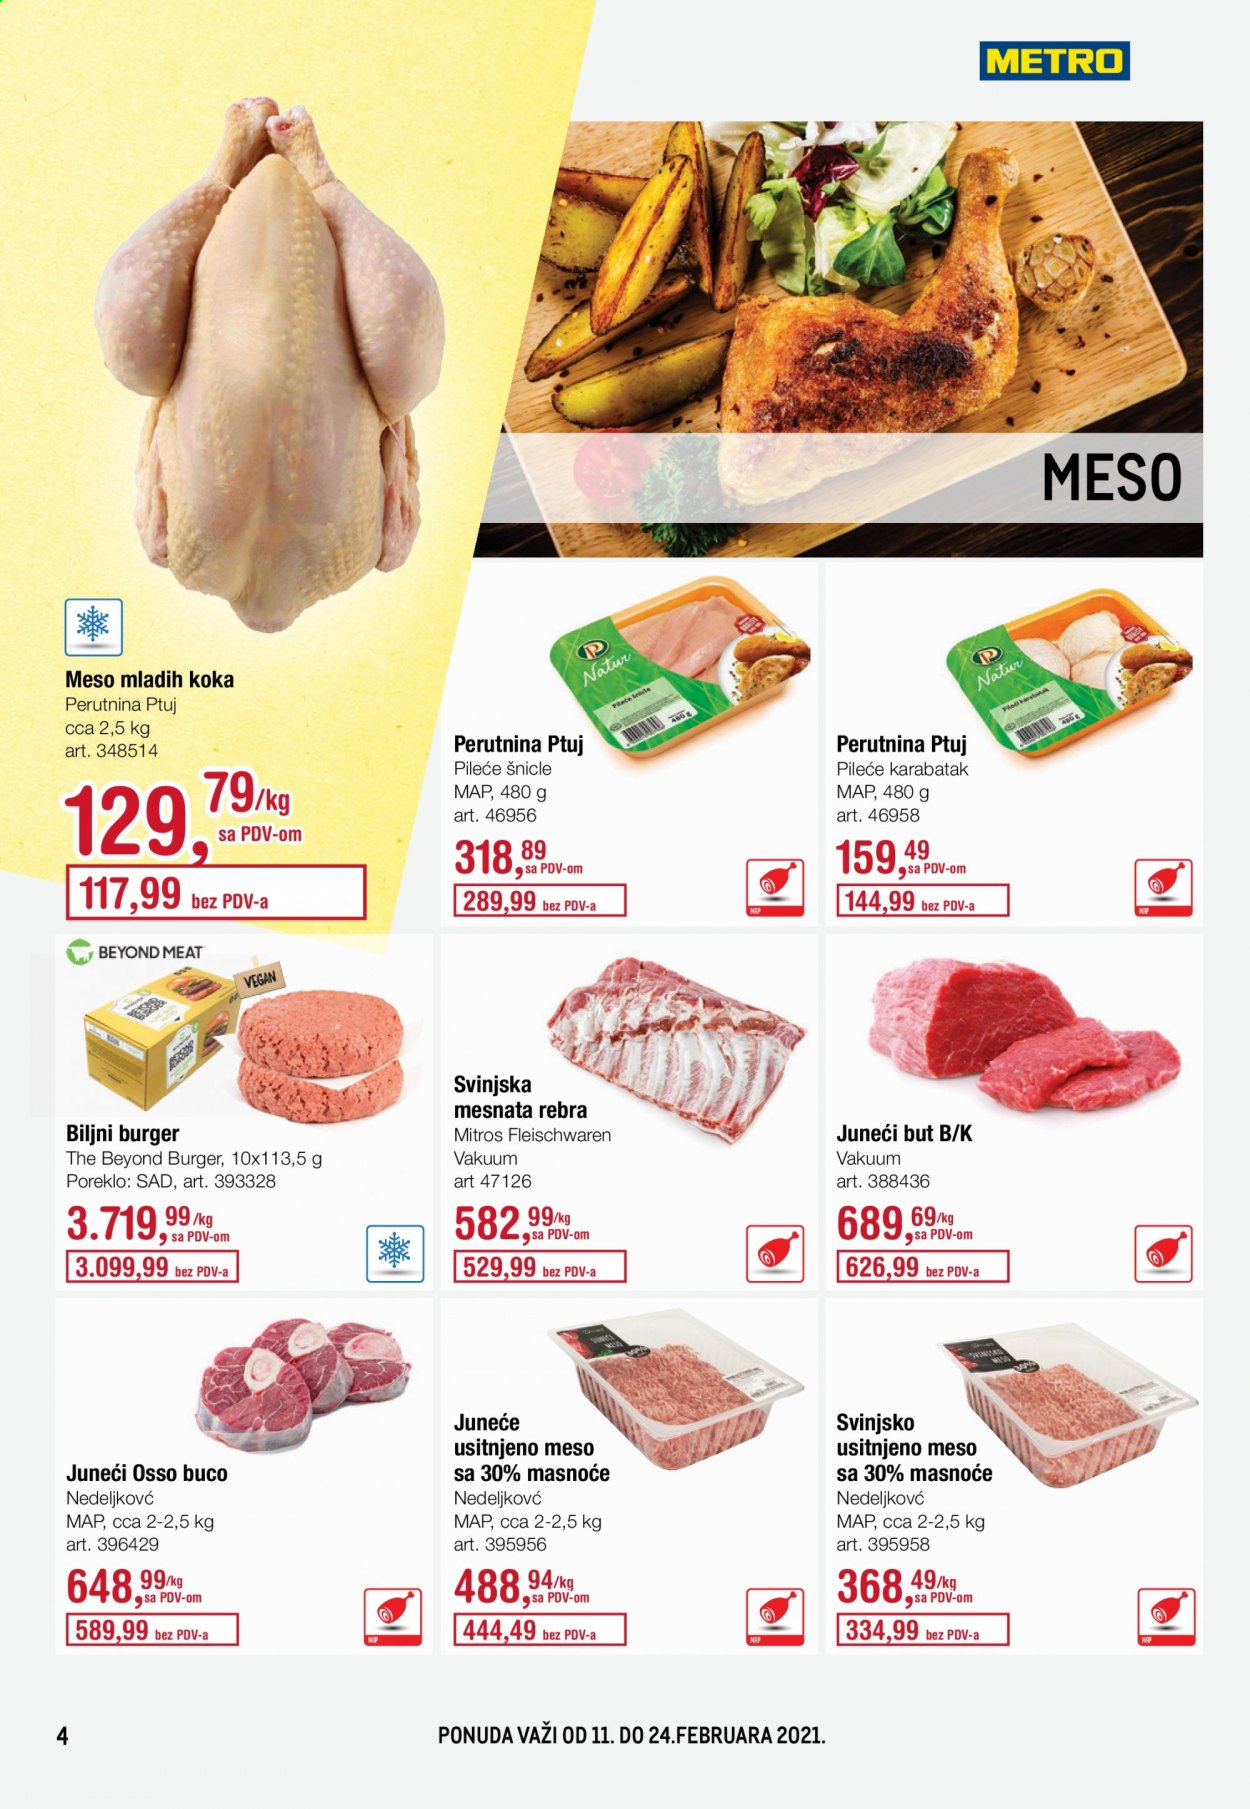 thumbnail - Metro katalog - 11.02.2021 - 24.02.2021 - Proizvodi na akciji - Perutnina Ptuj, pileće meso, pileća šnicla, juneći but, juneće meso, burger, mleveno meso, svinjsko mleveno meso, svinjsko meso, AKG. Stranica 4.